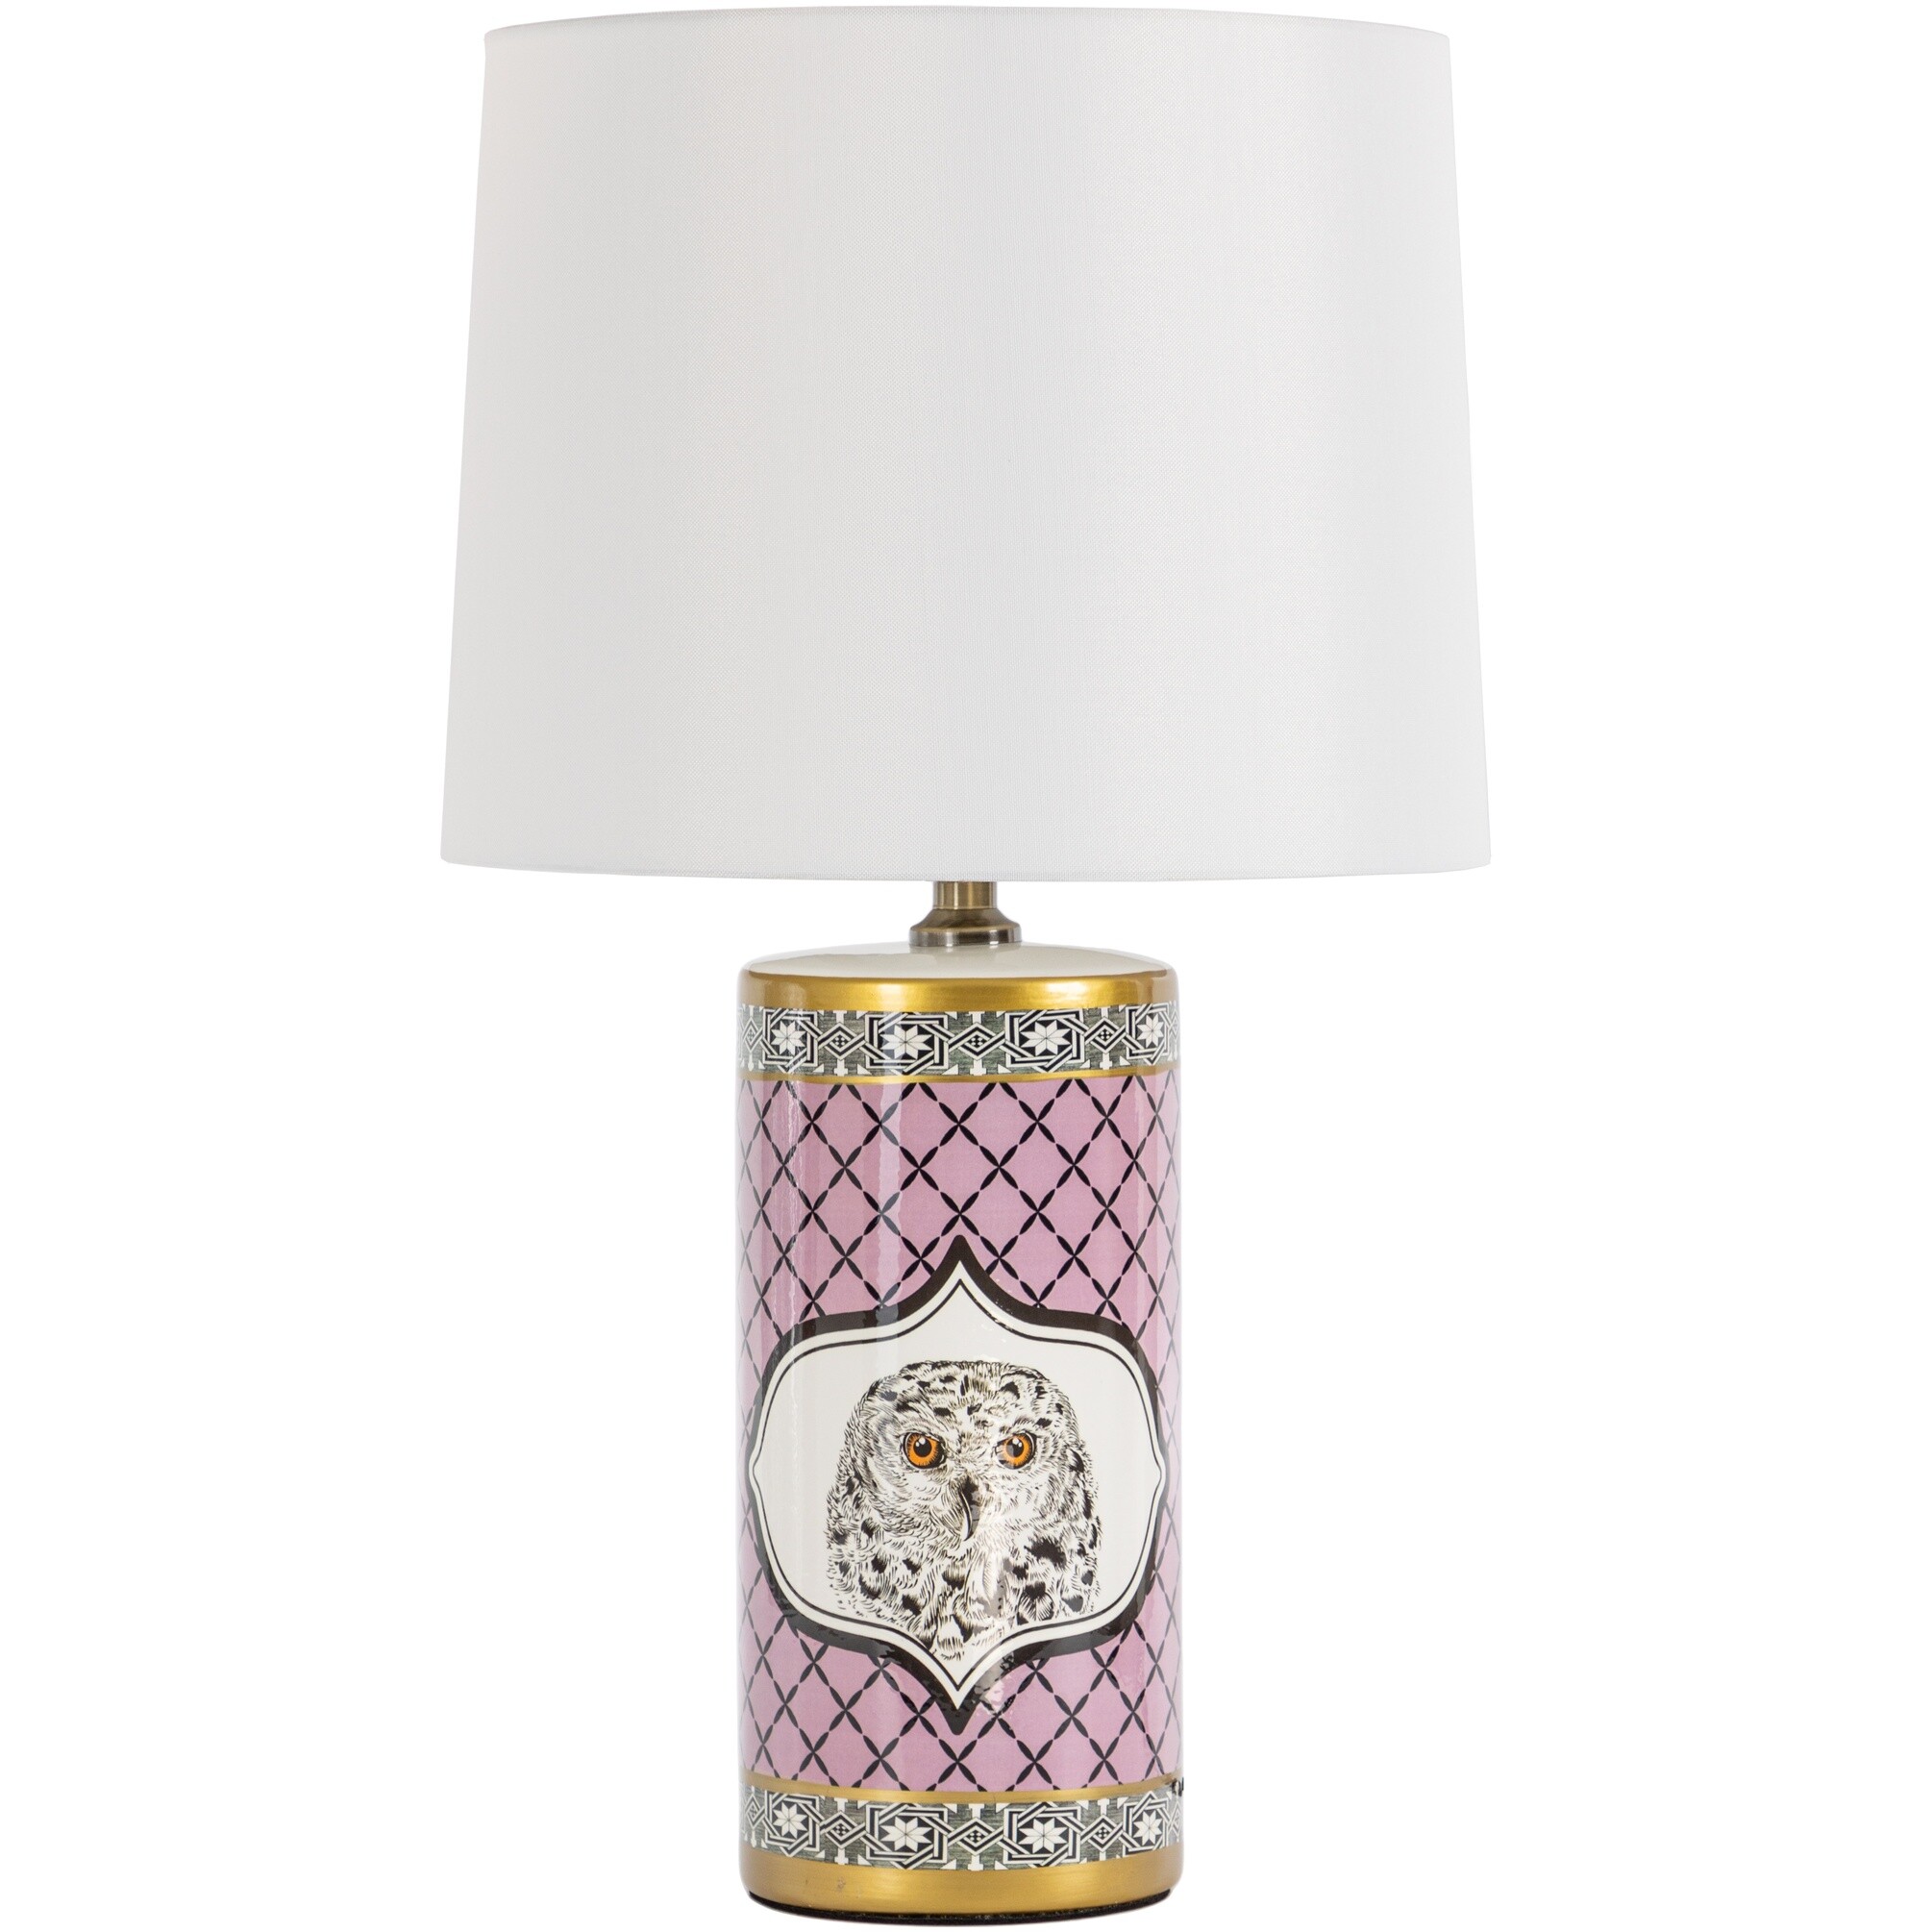 Лампа настольная керамическая с абажуром 62х35 см белая, розовая 58-034